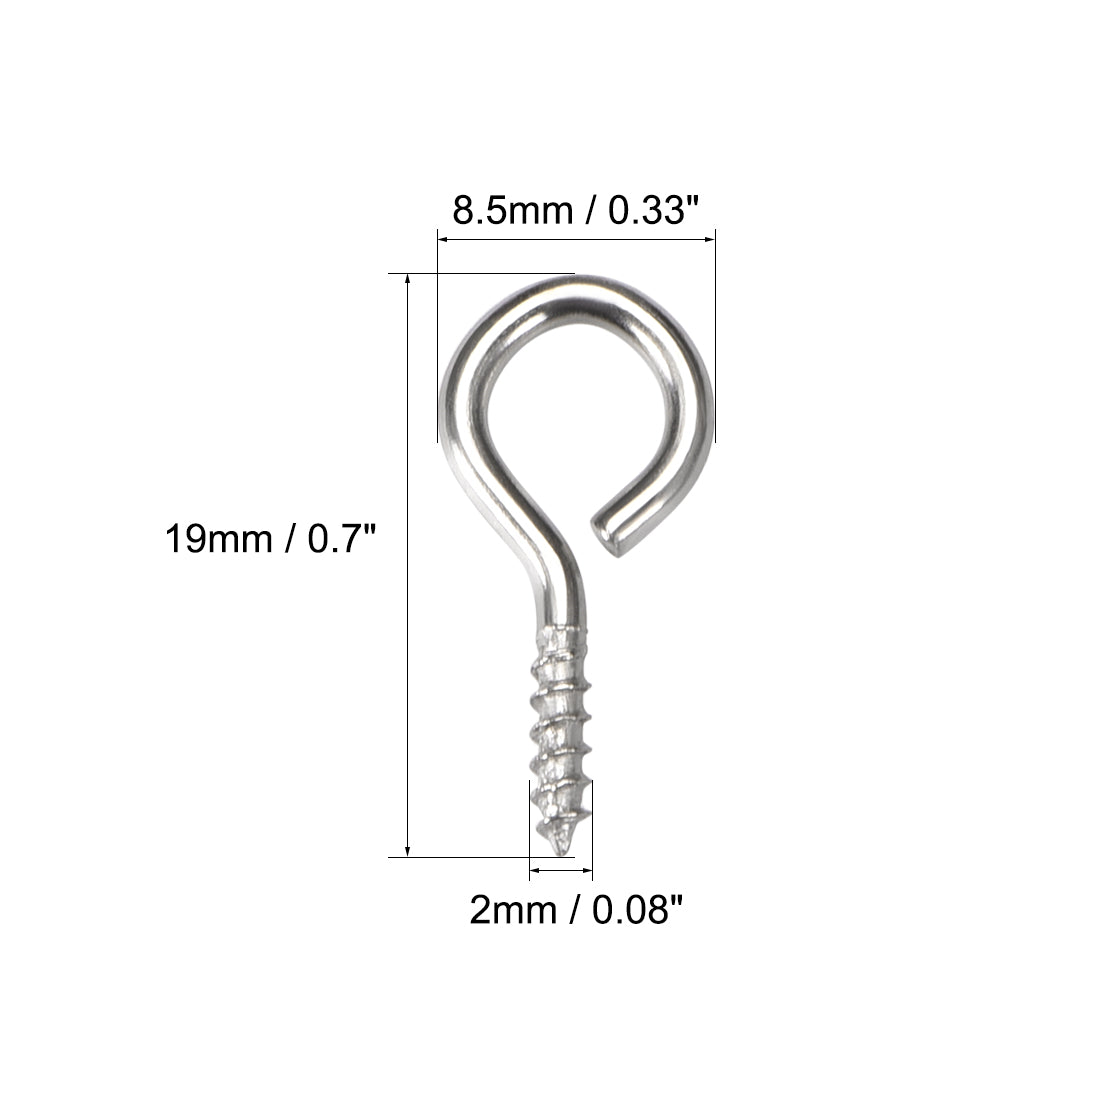 uxcell Uxcell 0.7" Small Screw Eye Hooks Self Tapping Screws Carbon Steel Screw-in Hanger Eye-Shape Ring Hooks Silver 50pcs